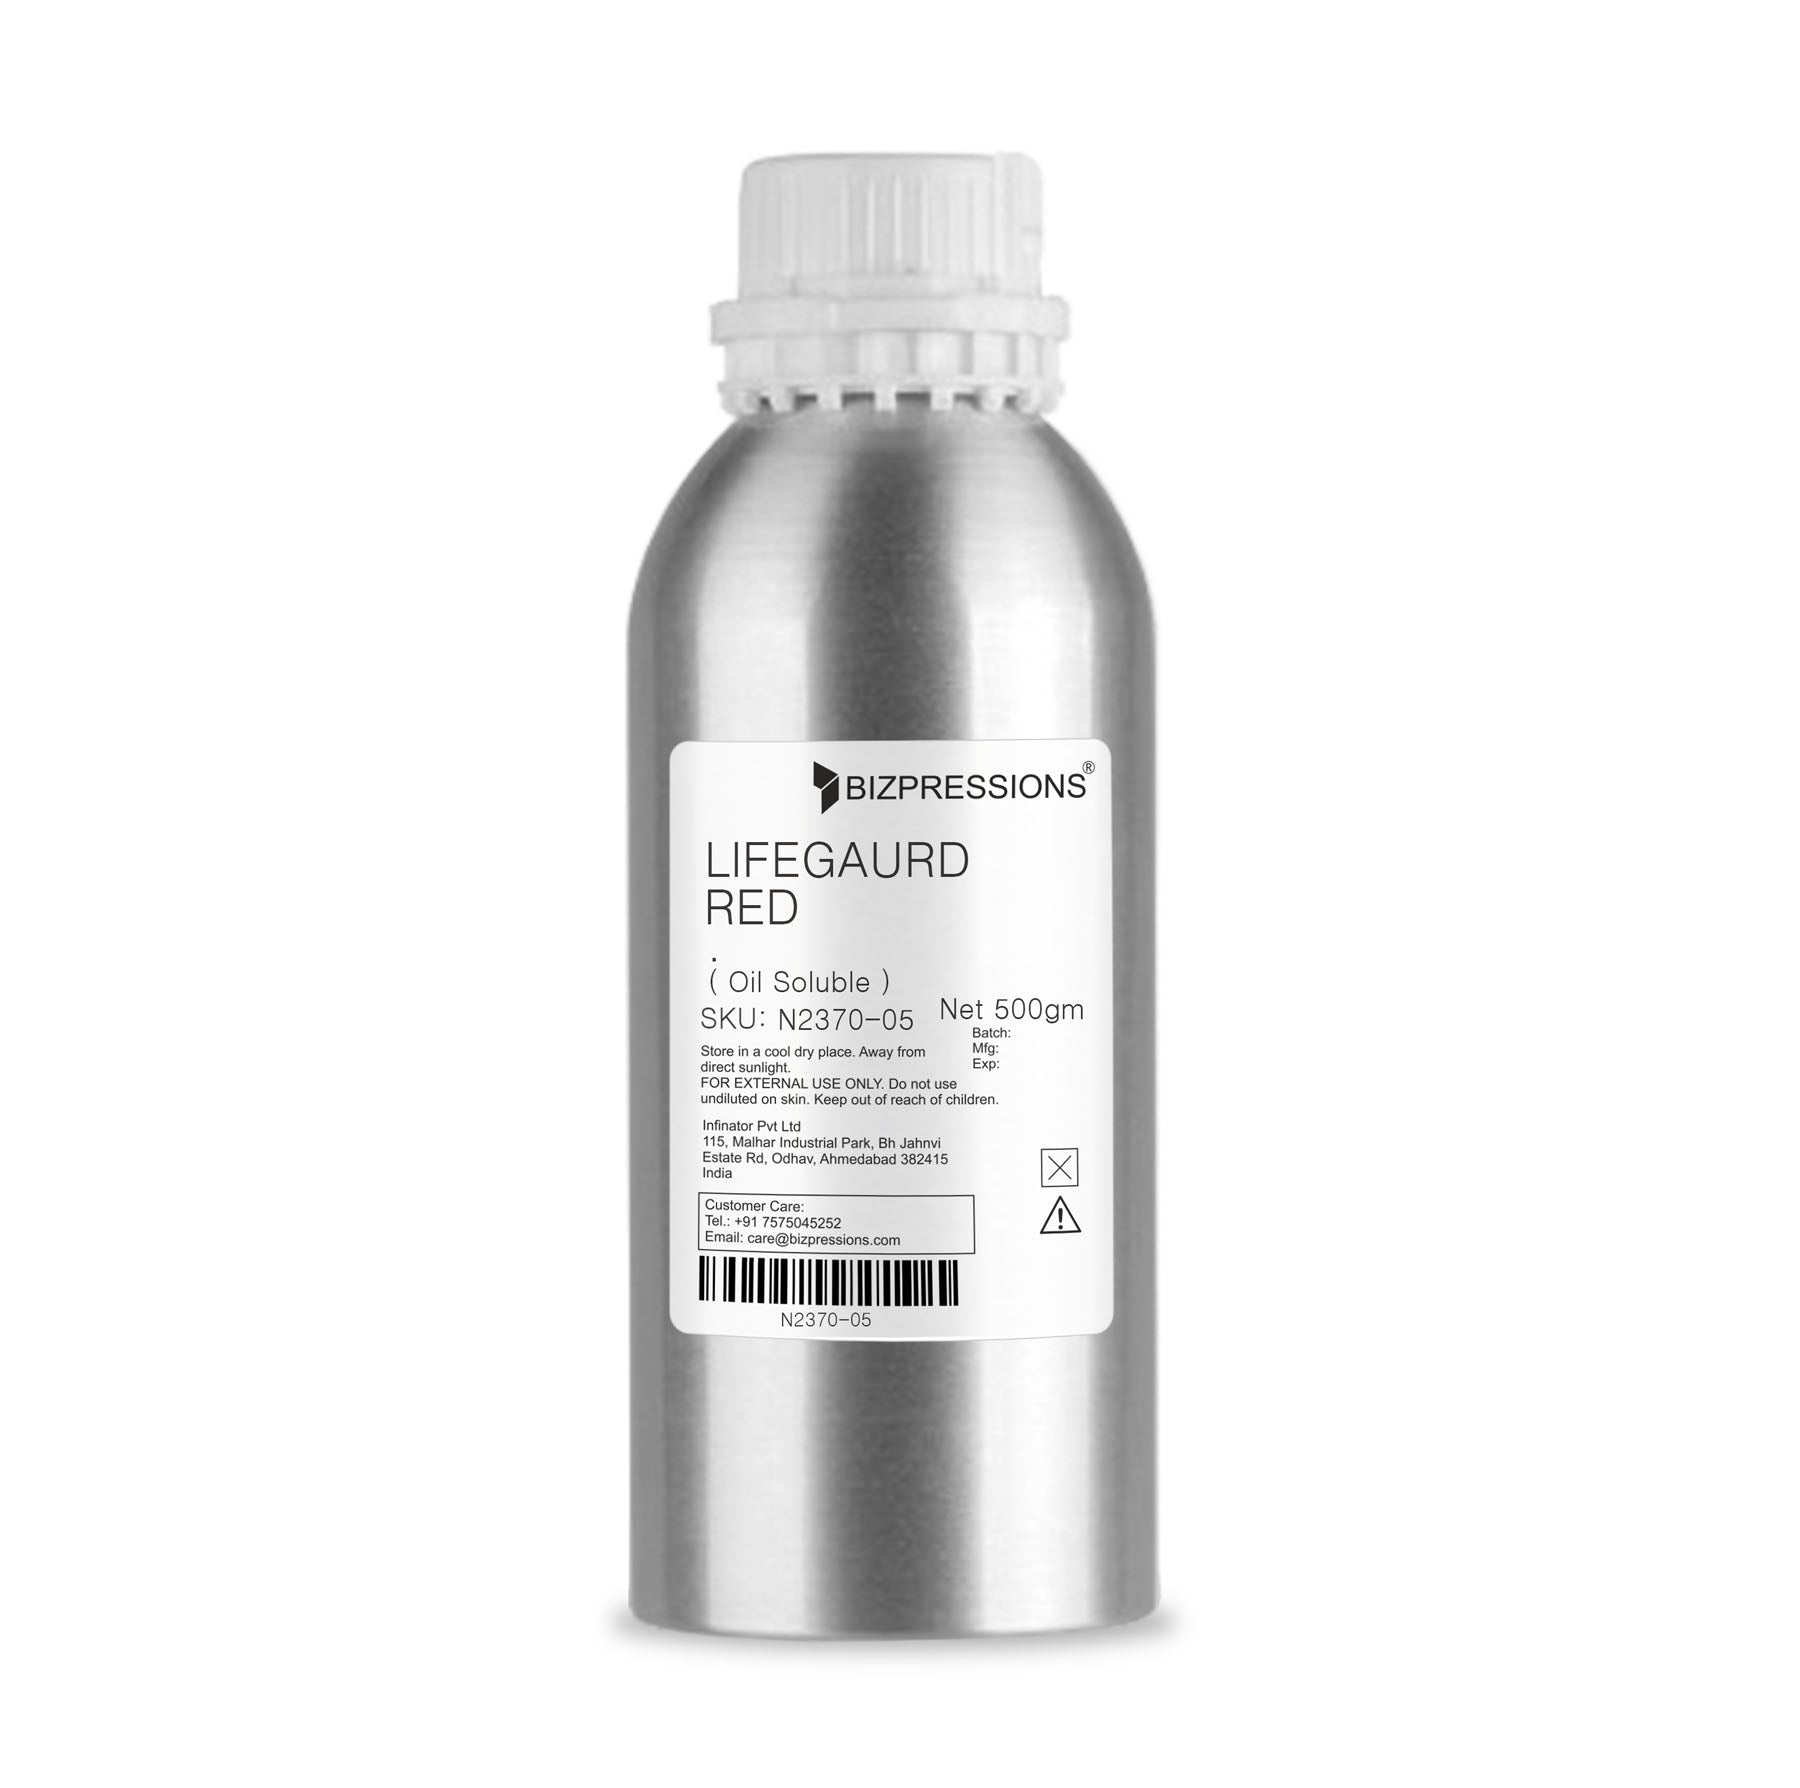 LIFEGAURD RED - Fragrance ( Oil Soluble ) - 500 gm